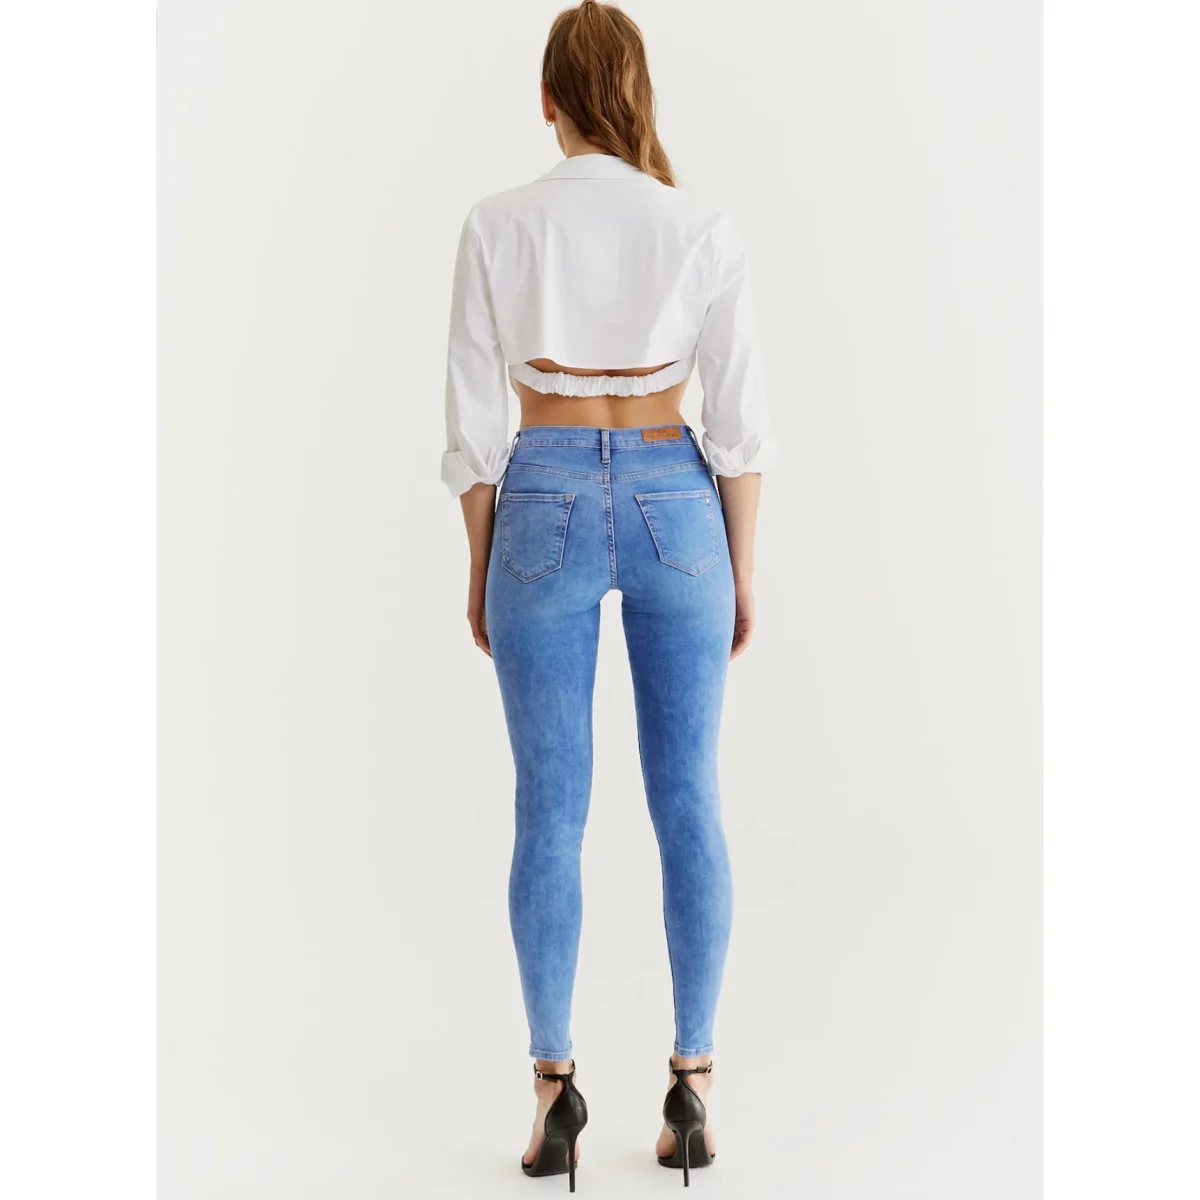 Begroeten complicaties zomer Coj Jeans Sophia Azur Blue | Hoge taille skinny | Broeken Binkie